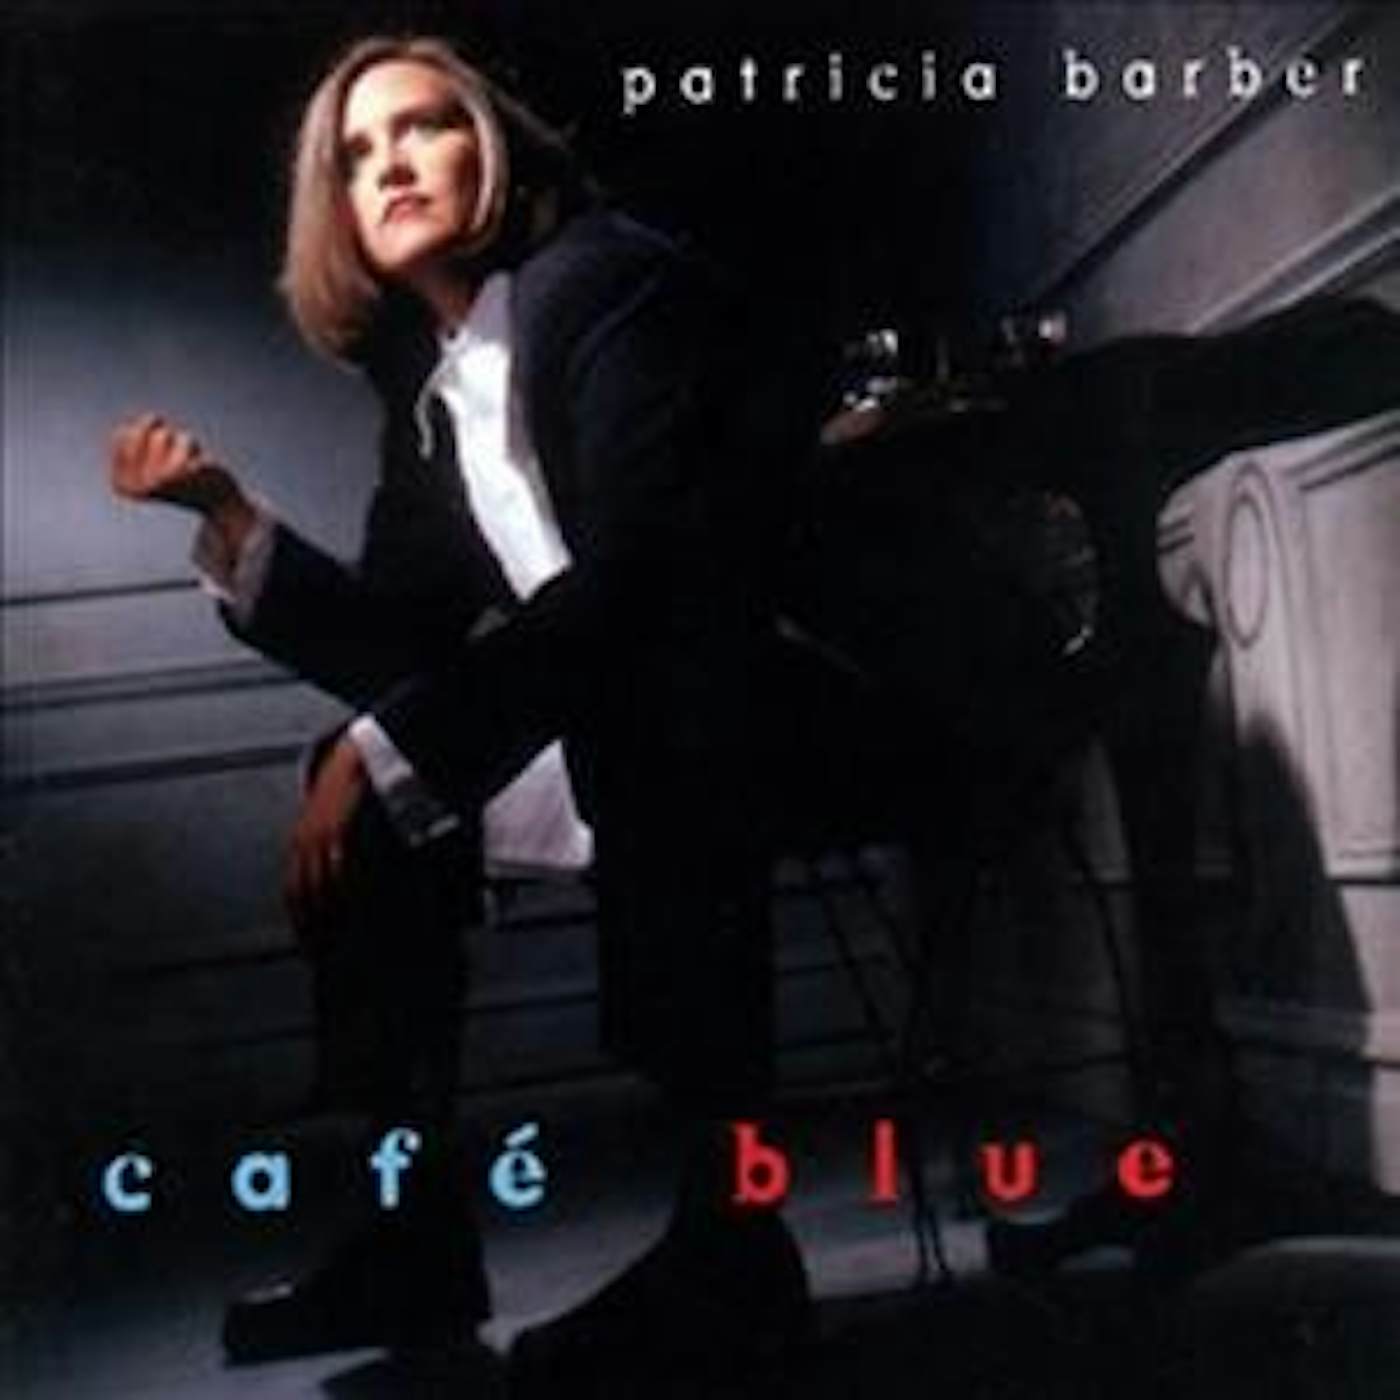 Patricia Barber Cafe Blue Vinyl Record